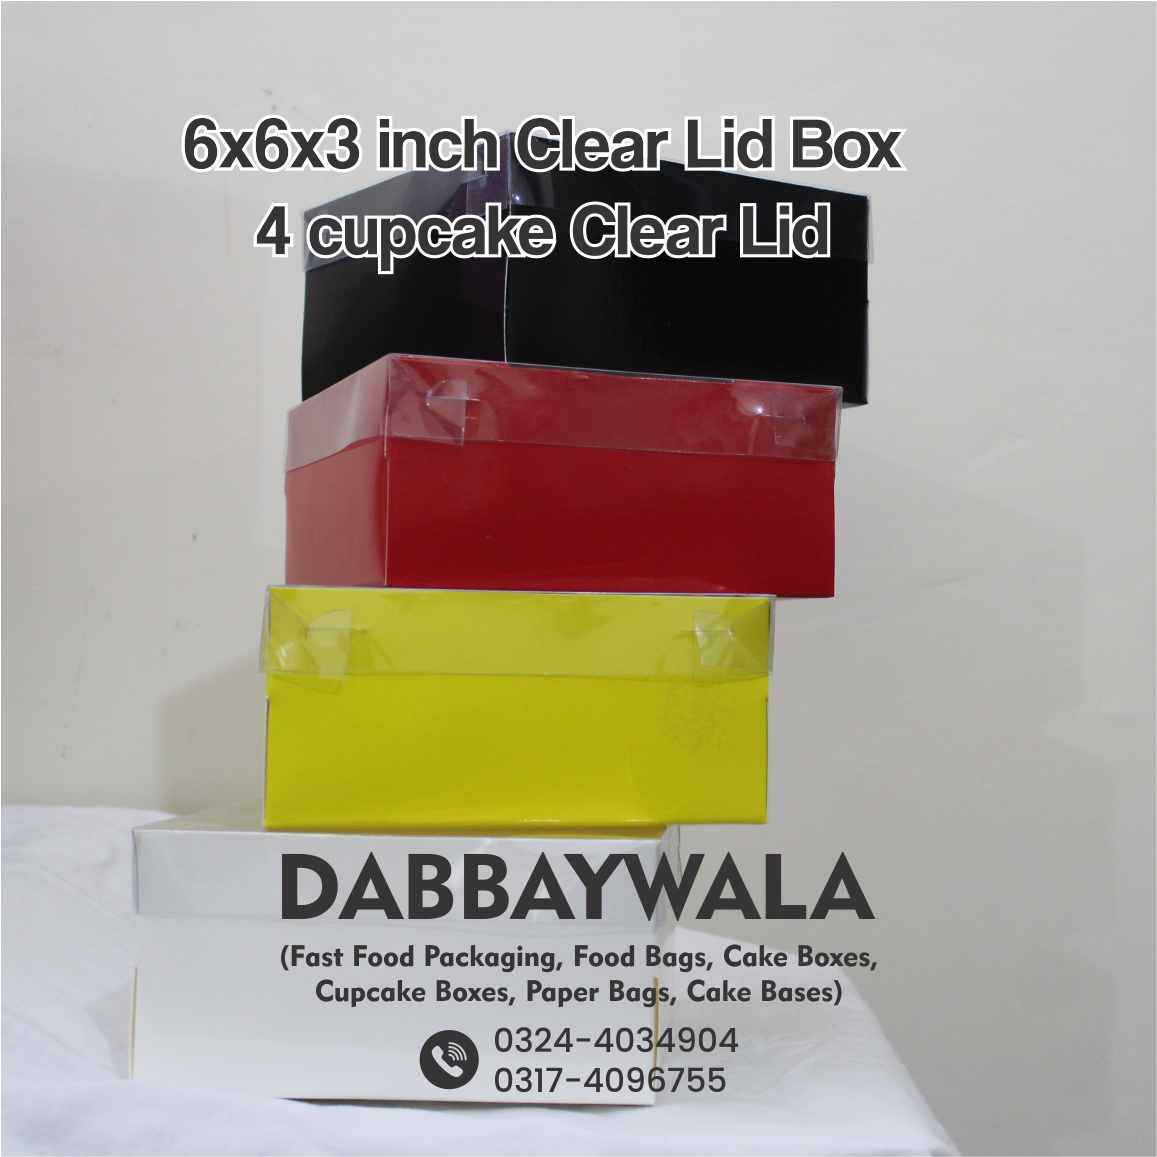 6x6x3 inch - 4 Cupcake Box